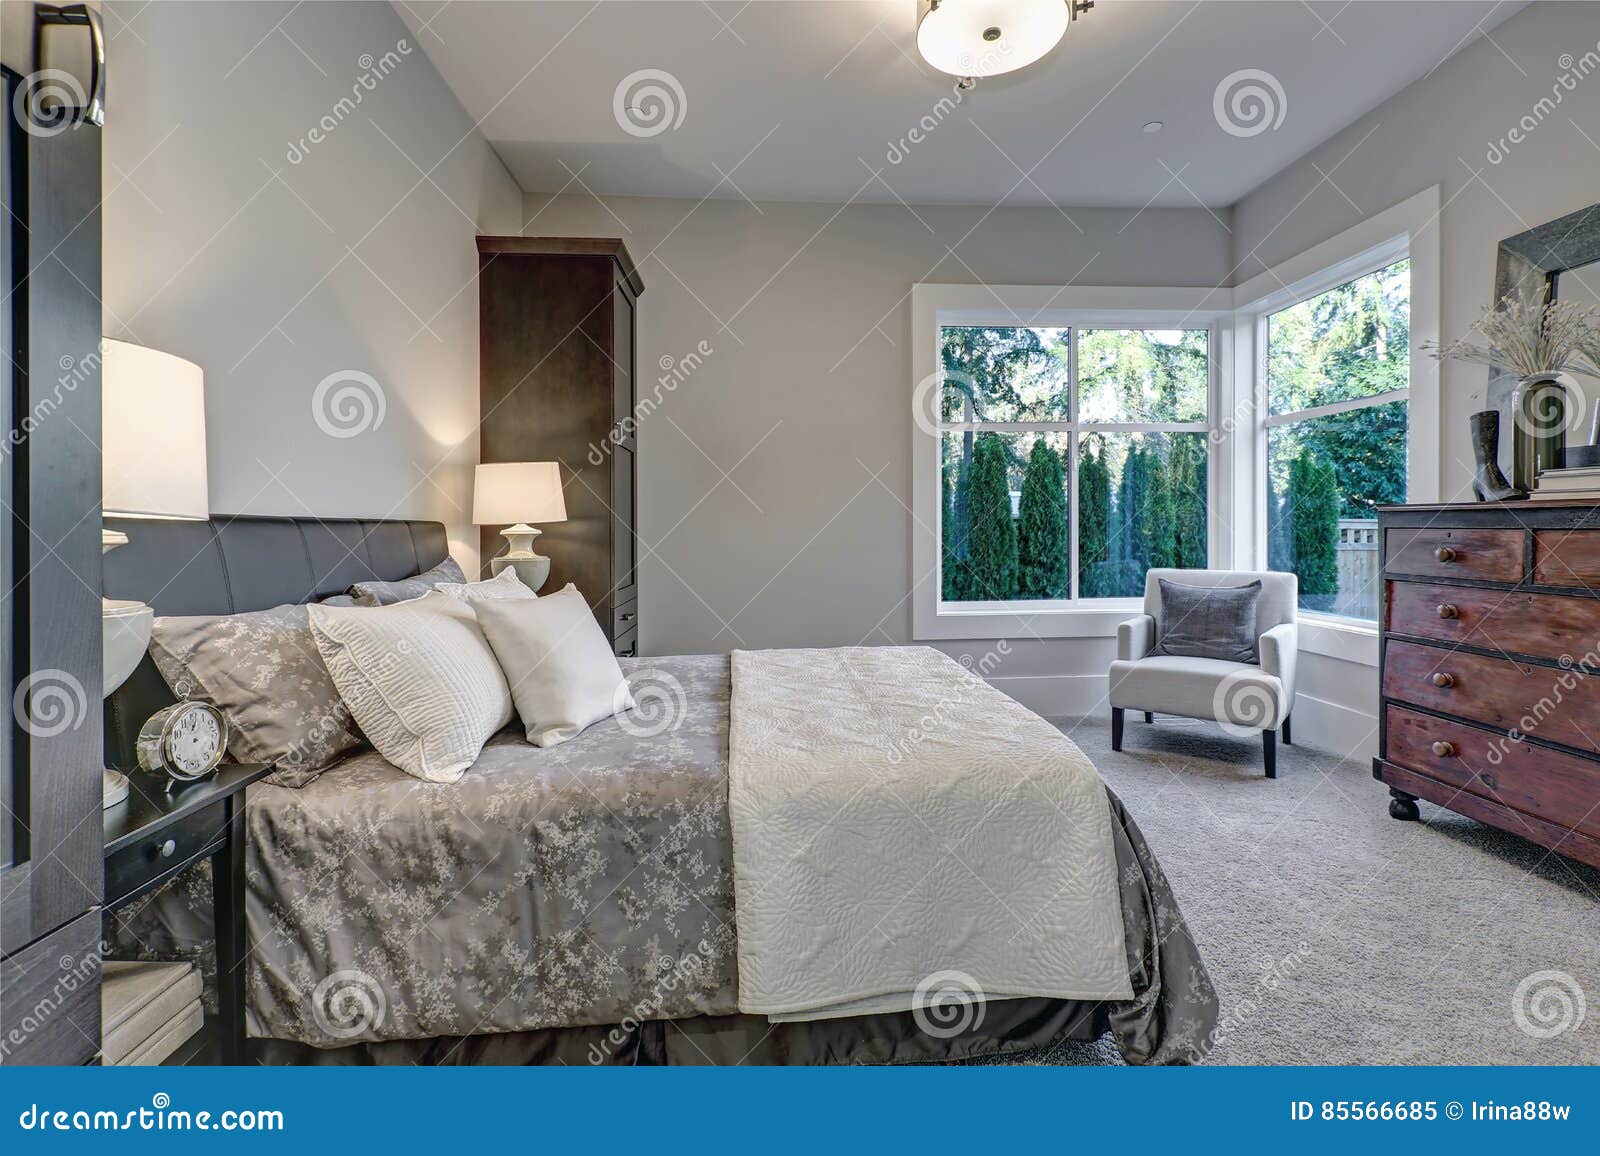 Cozy Bedroom Interior Features Soft Gray Walls Stock Image Image